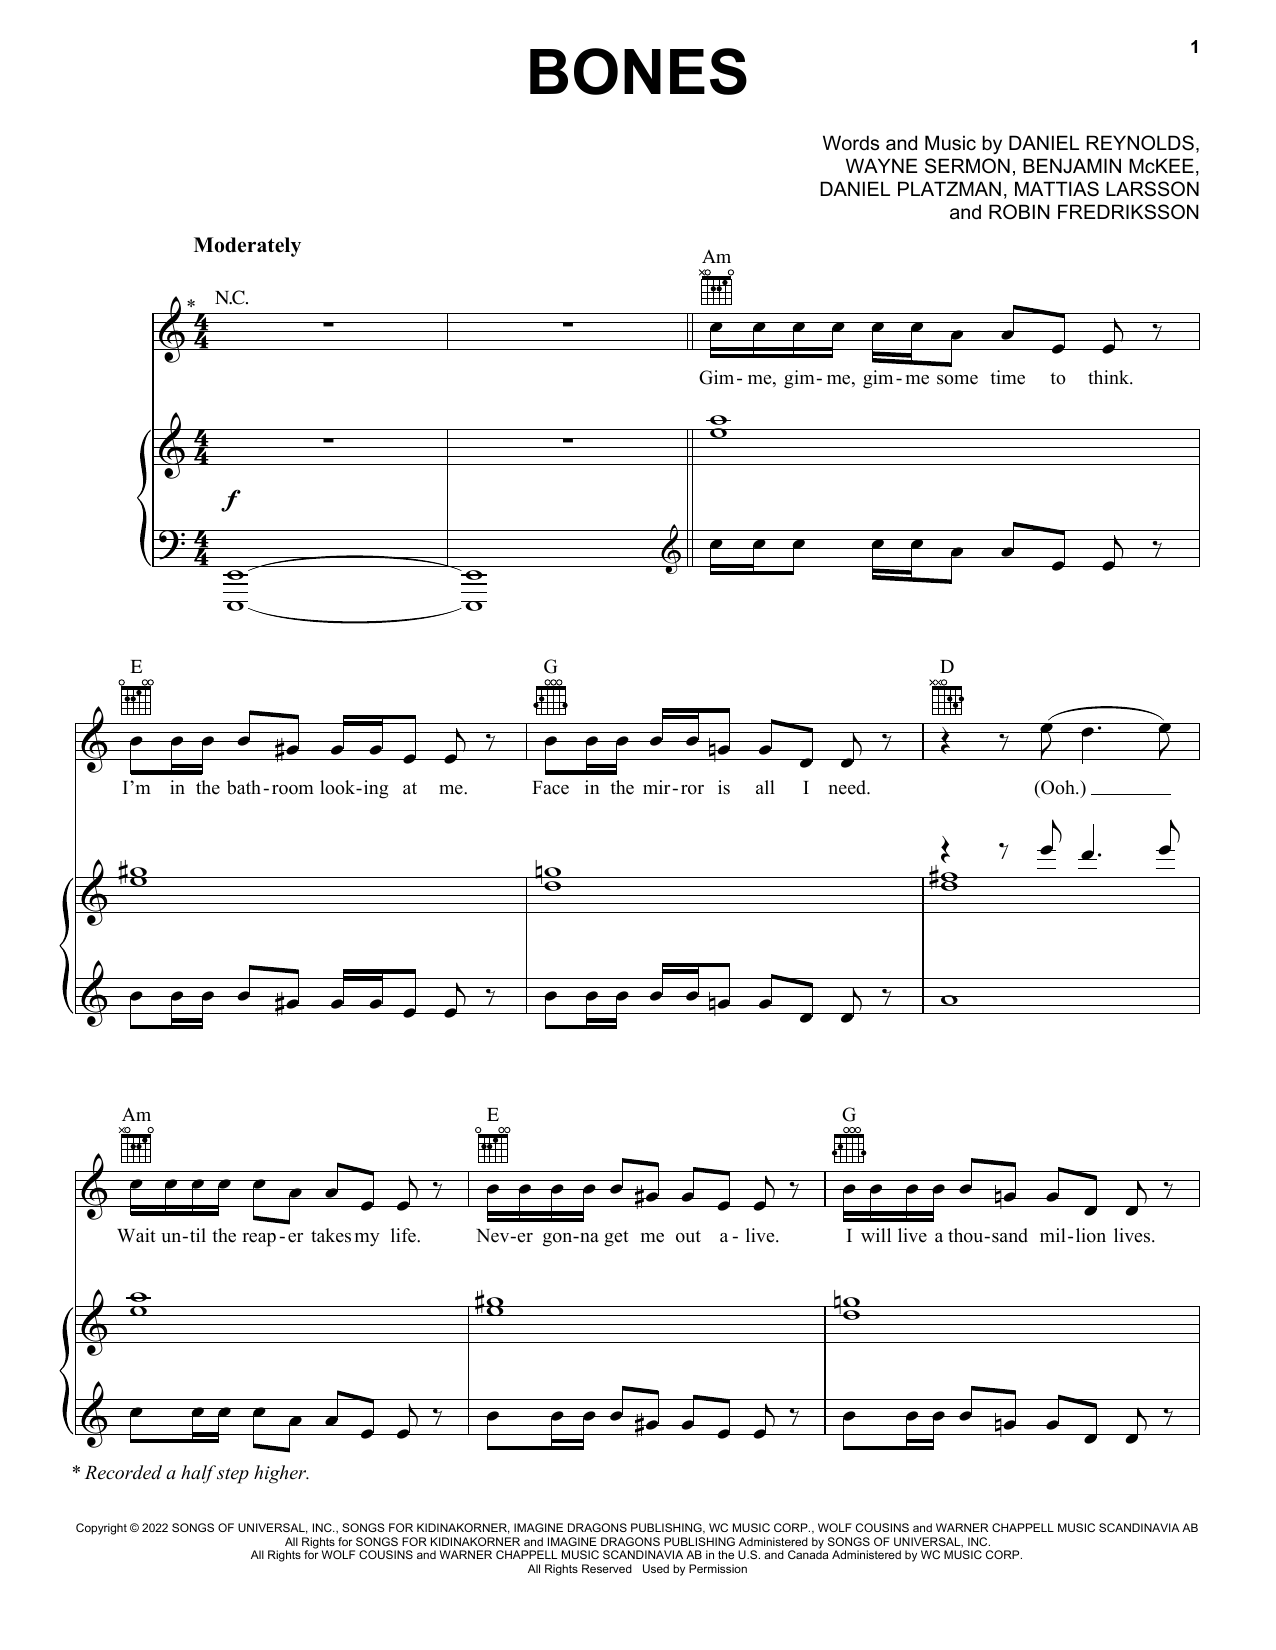 Imagine Dragons Bones sheet music notes printable PDF score